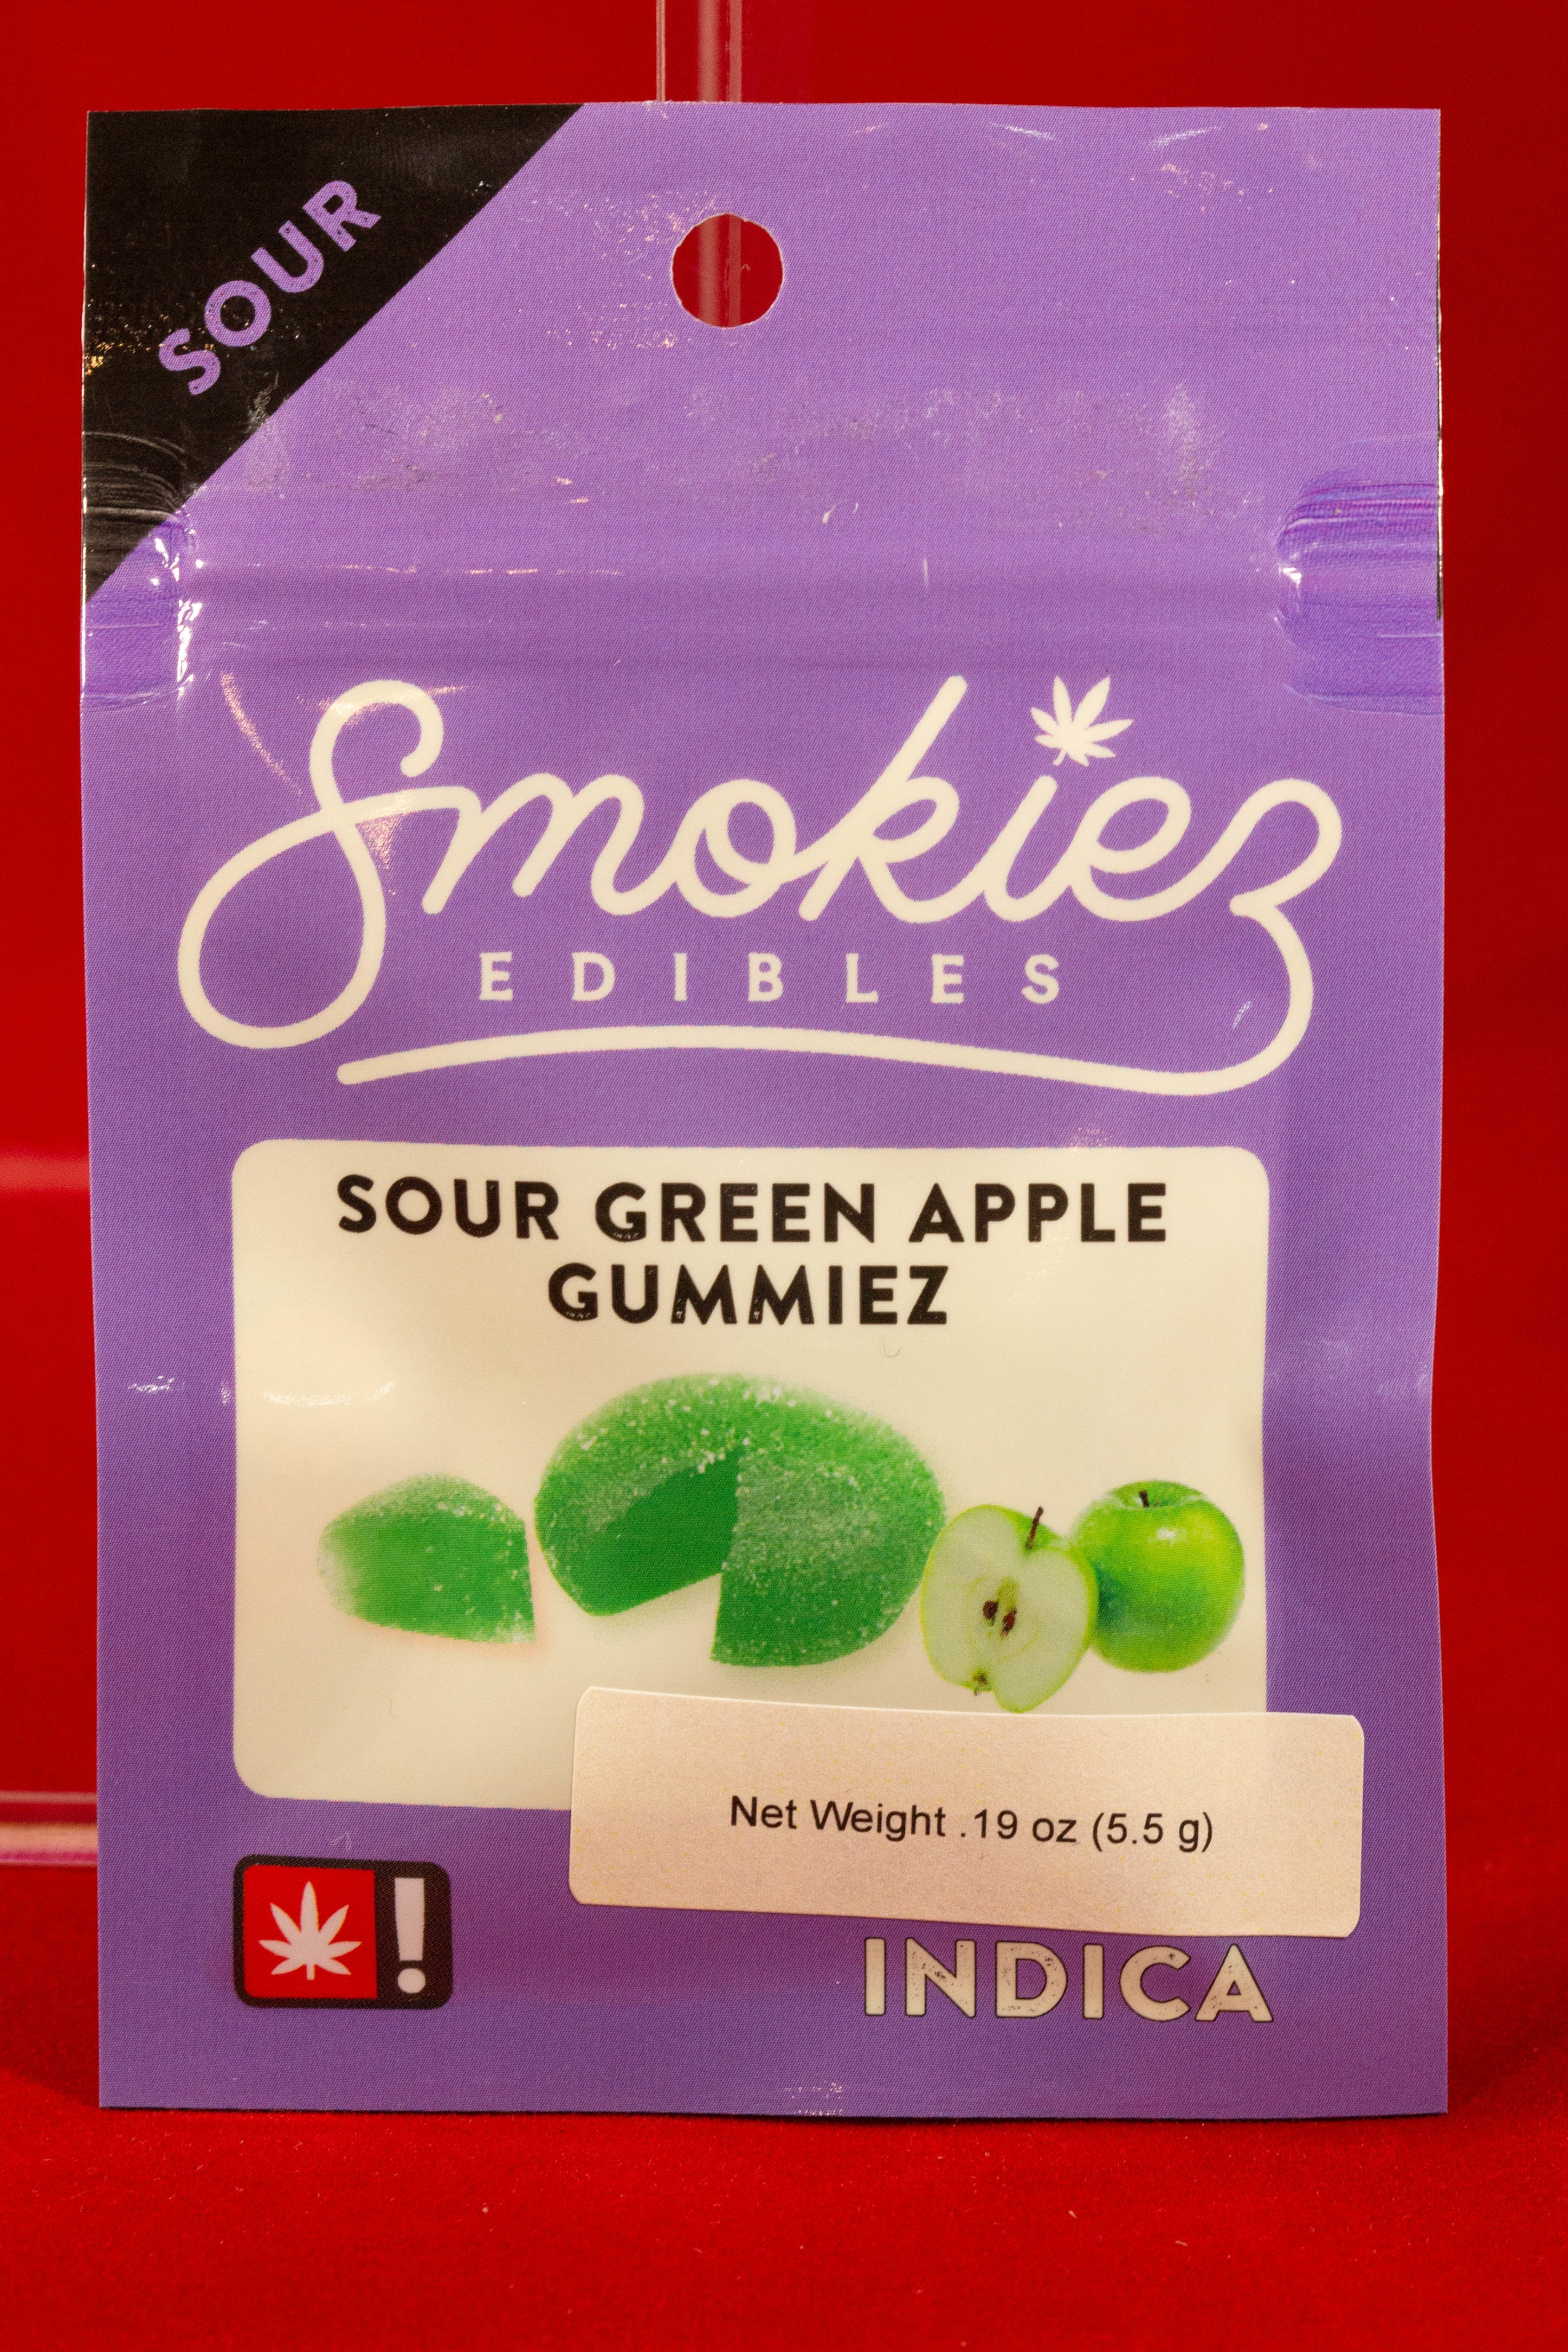 edible-indica-sour-green-apple-gummy-by-smokiez